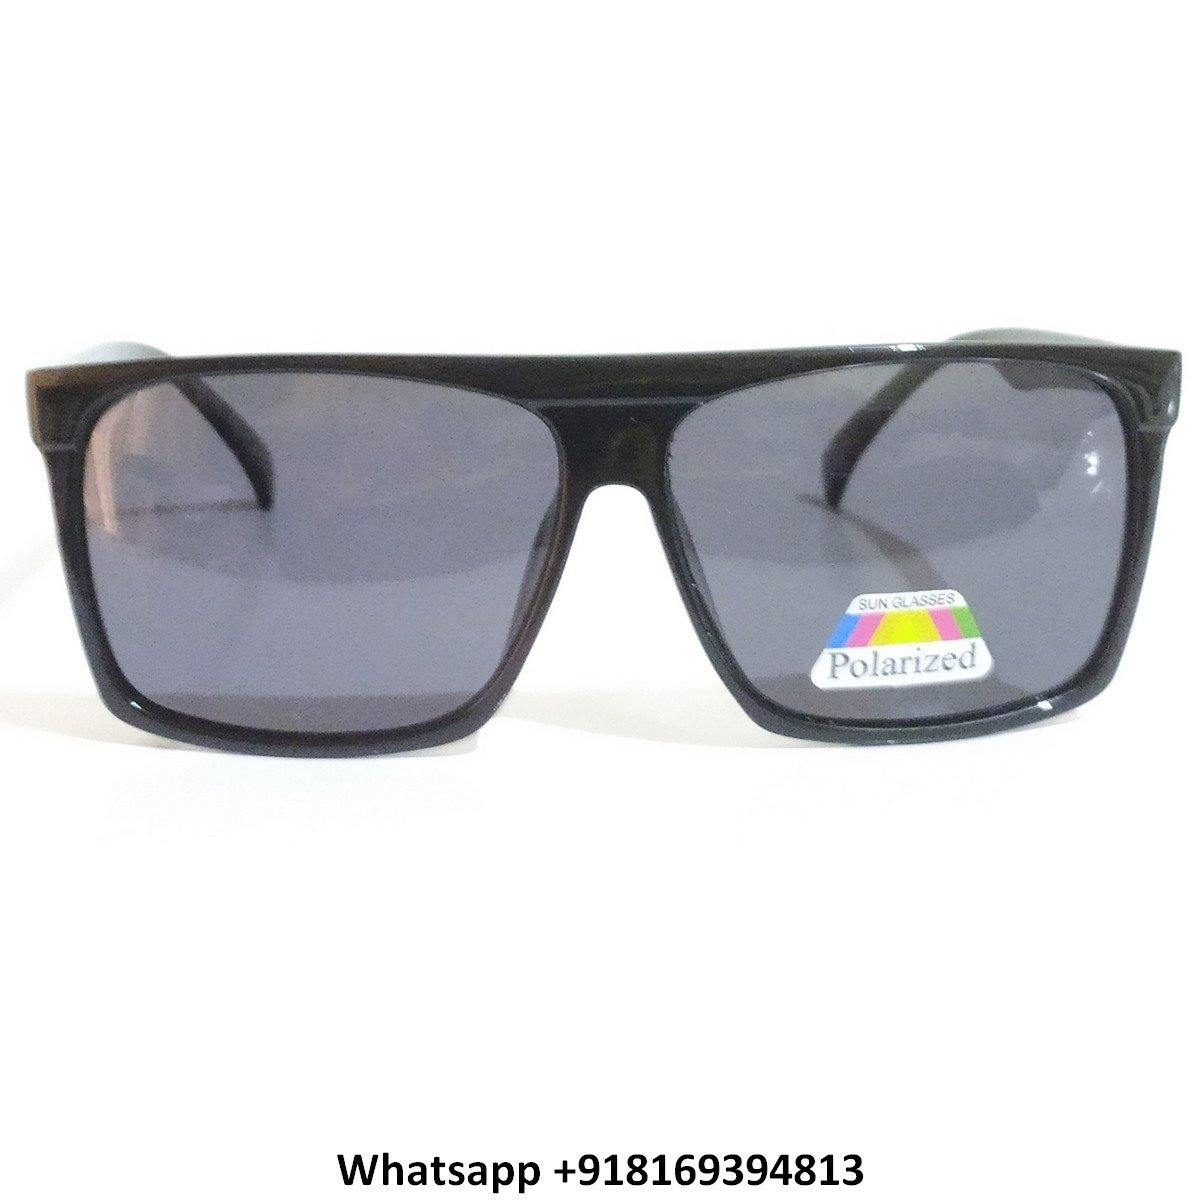 Trendy Square Polarized Sunglasses for Men and Women 2156BK - Glasses India Online